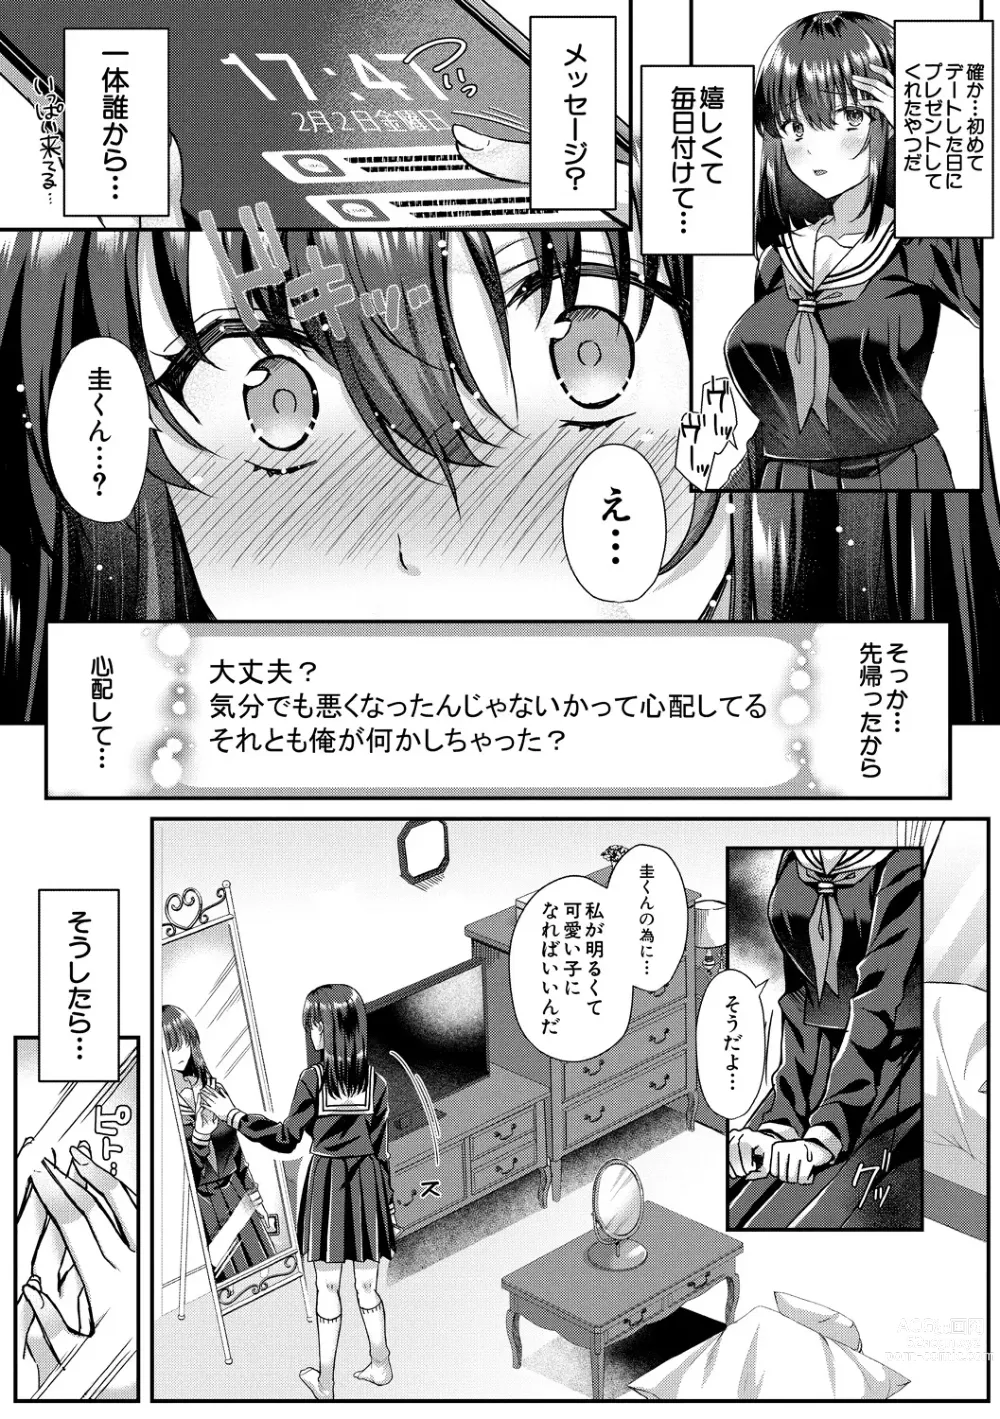 Page 9 of manga Seifuku Kanojo, Netorare Ochi